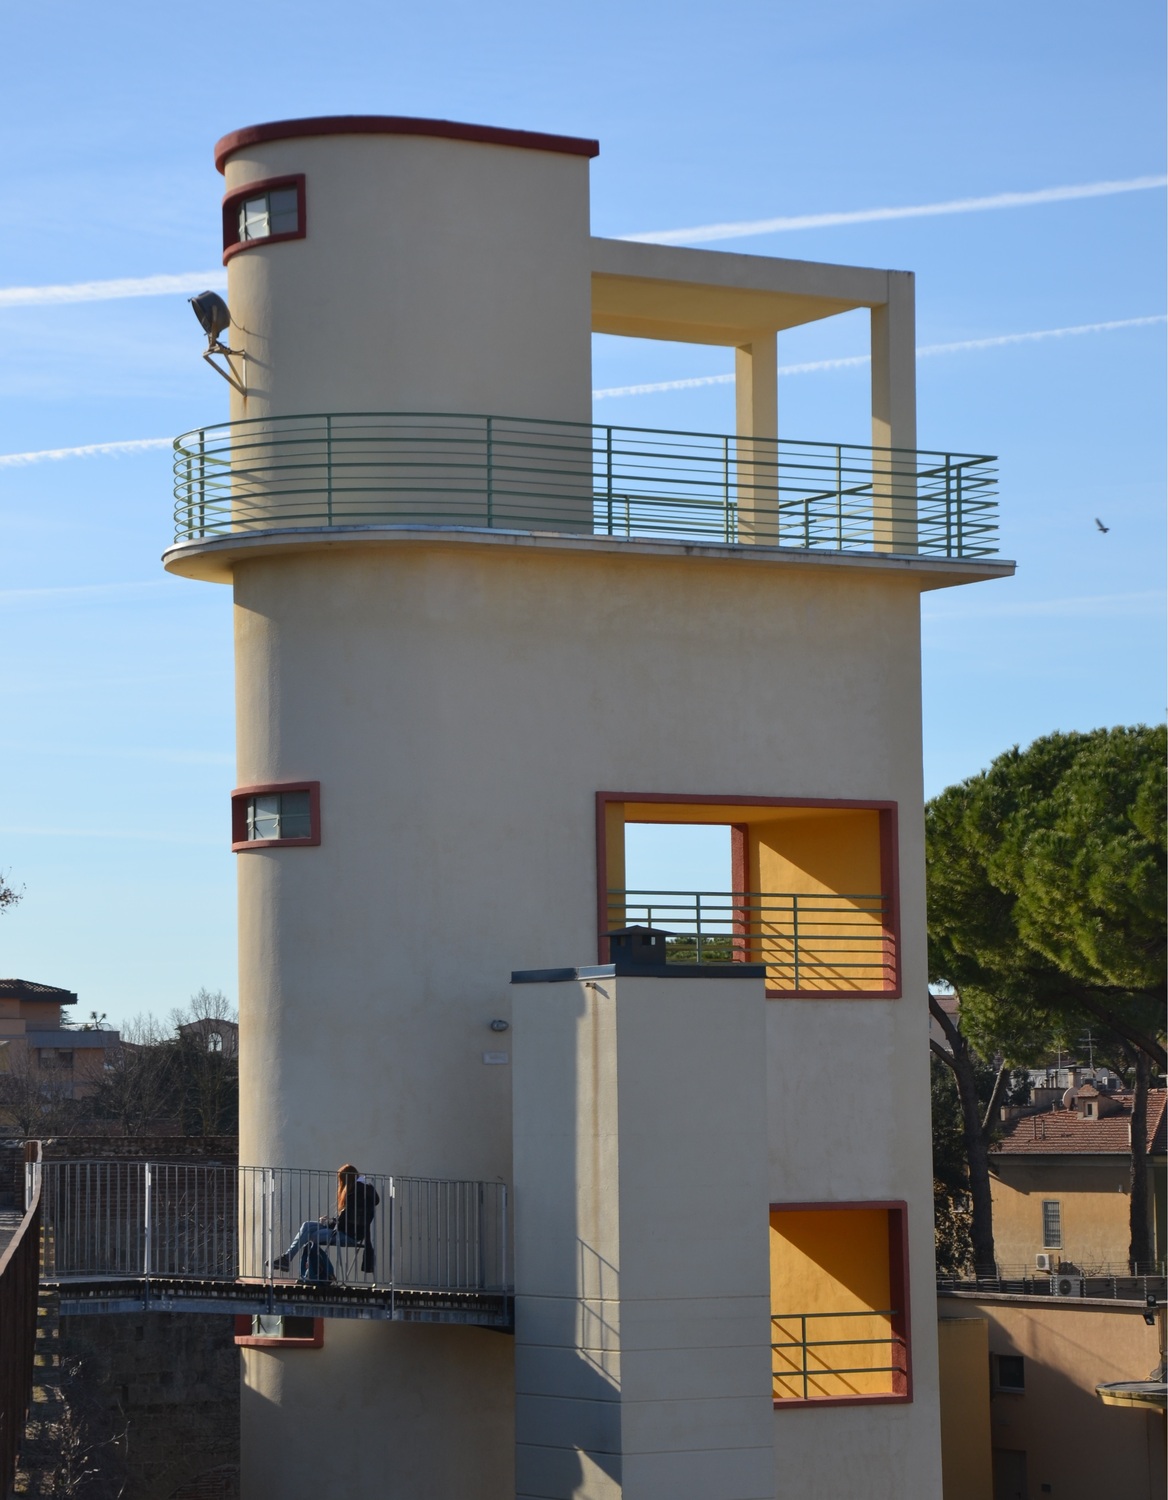 Torre piezometrica ( da Mura di Pisa, www.muradipisa.it)